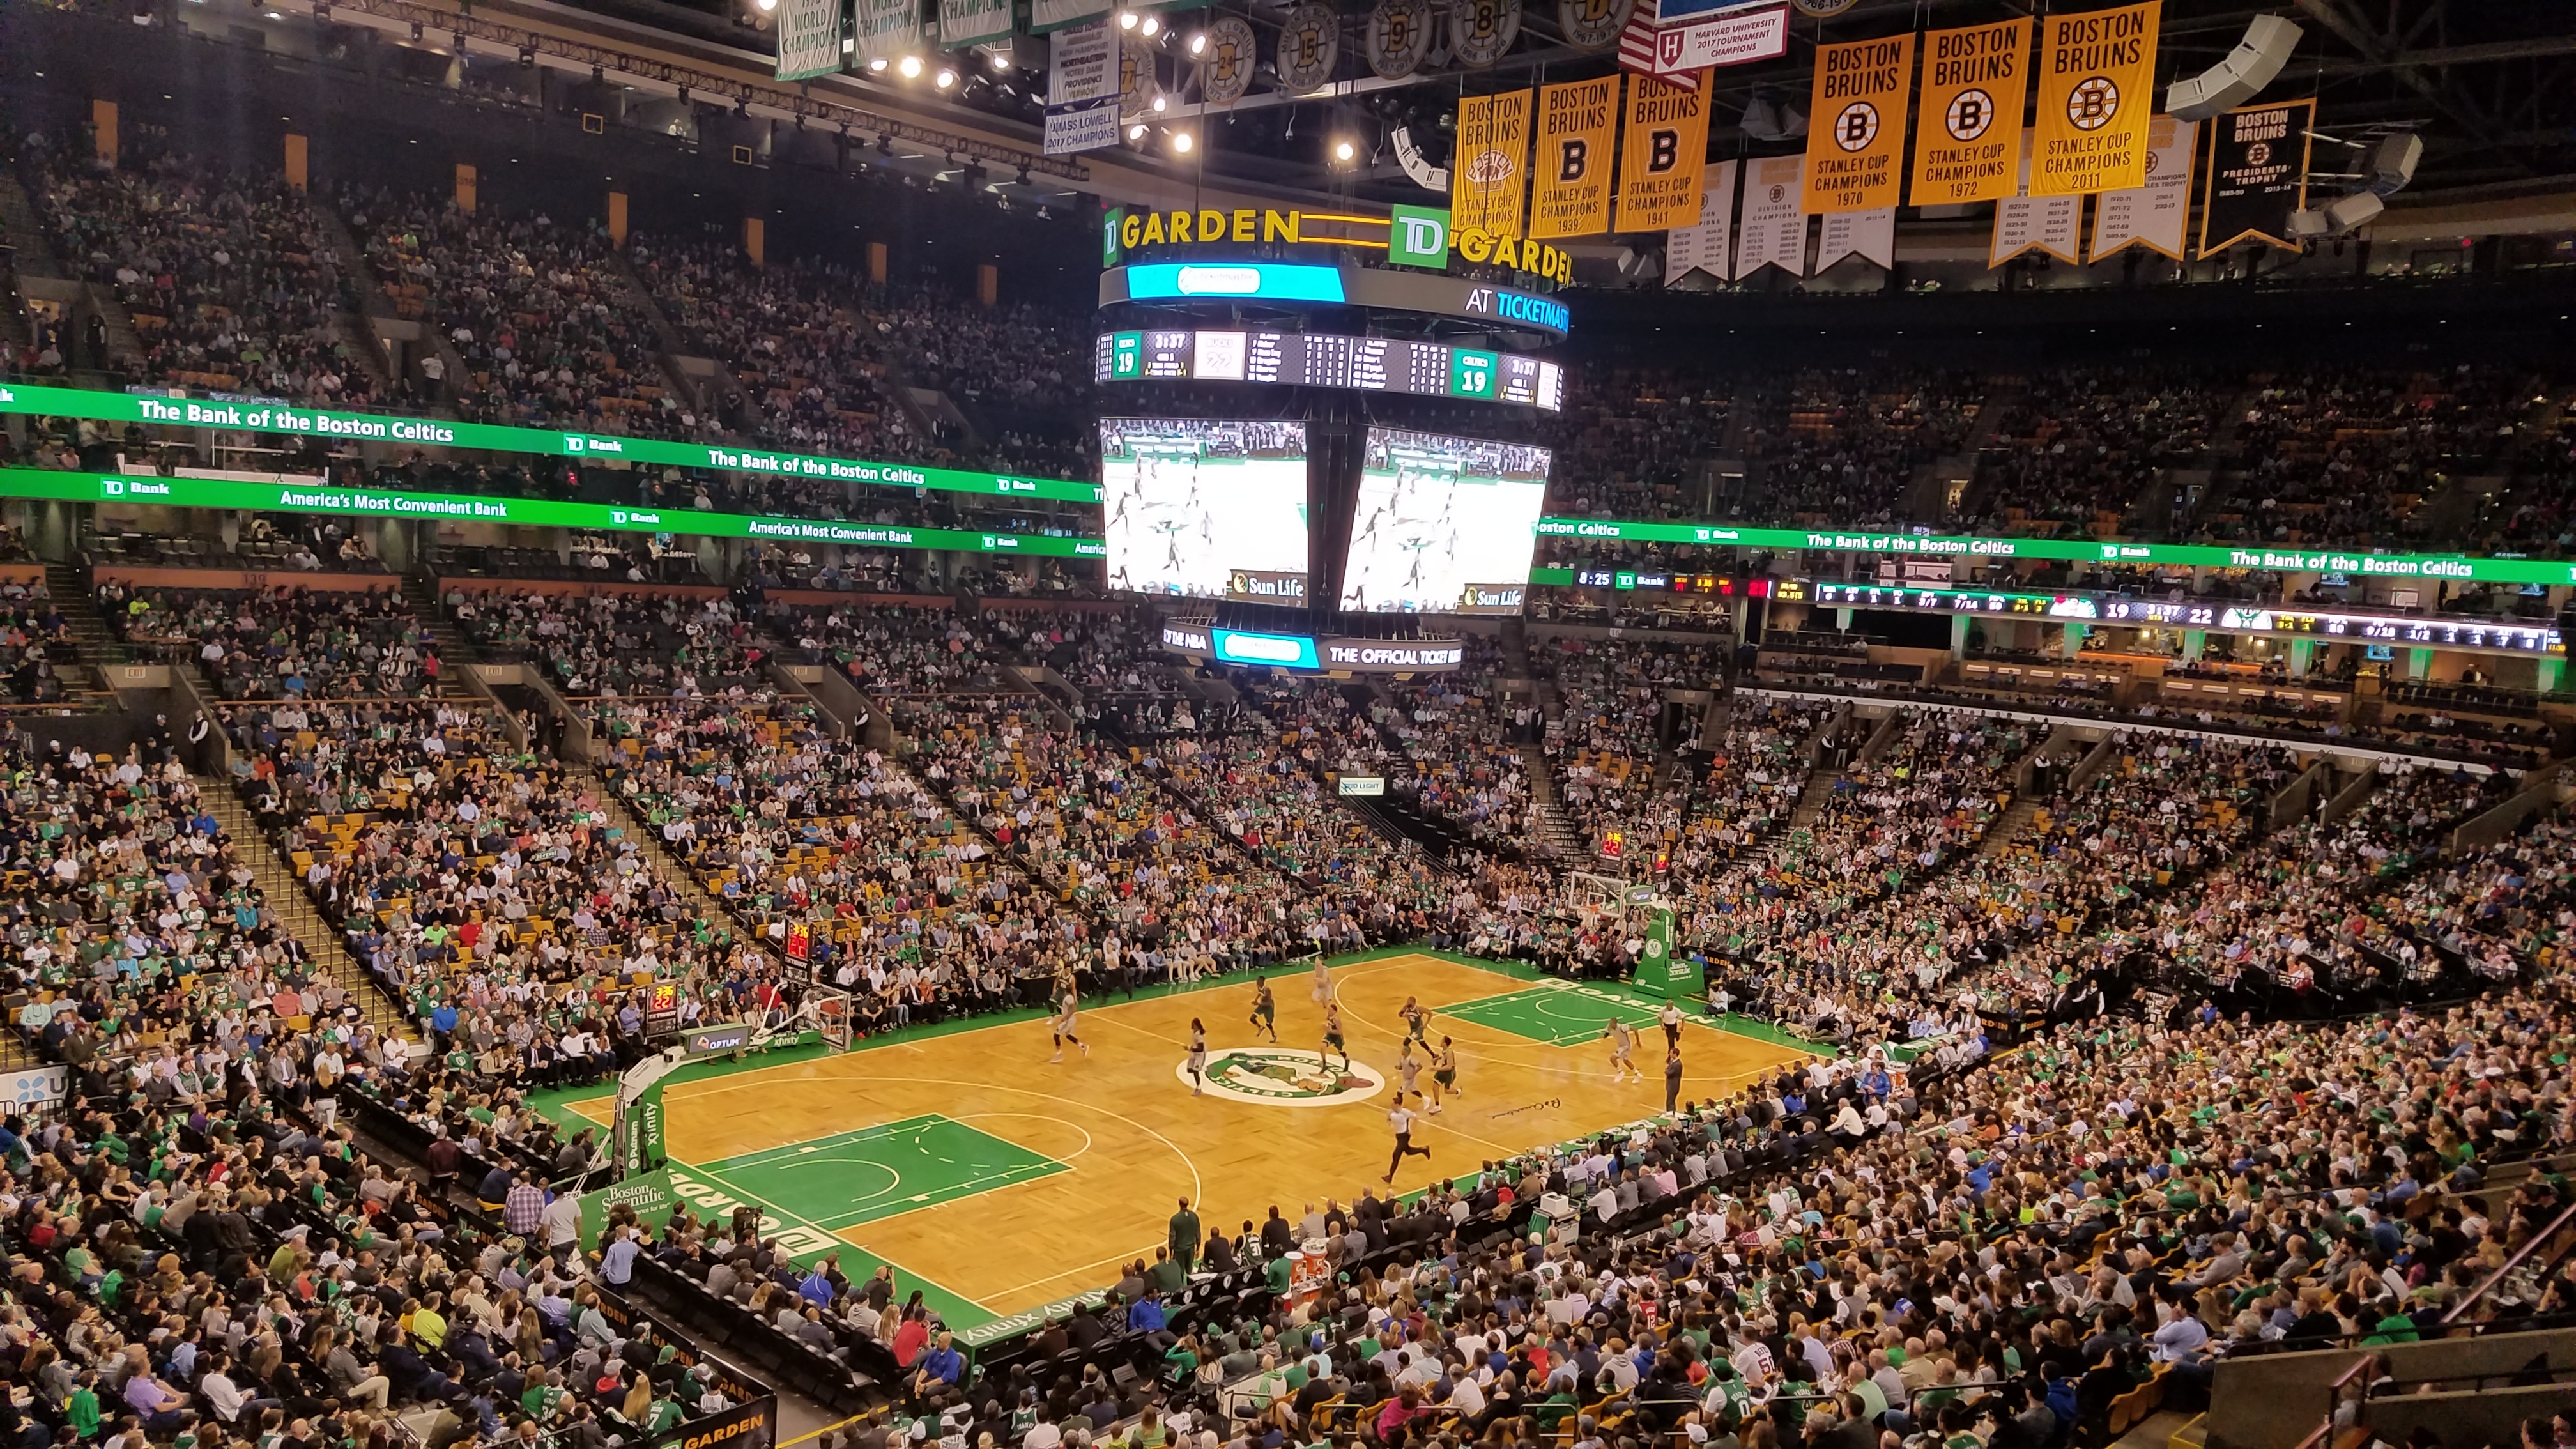 Celtics vs Bucks